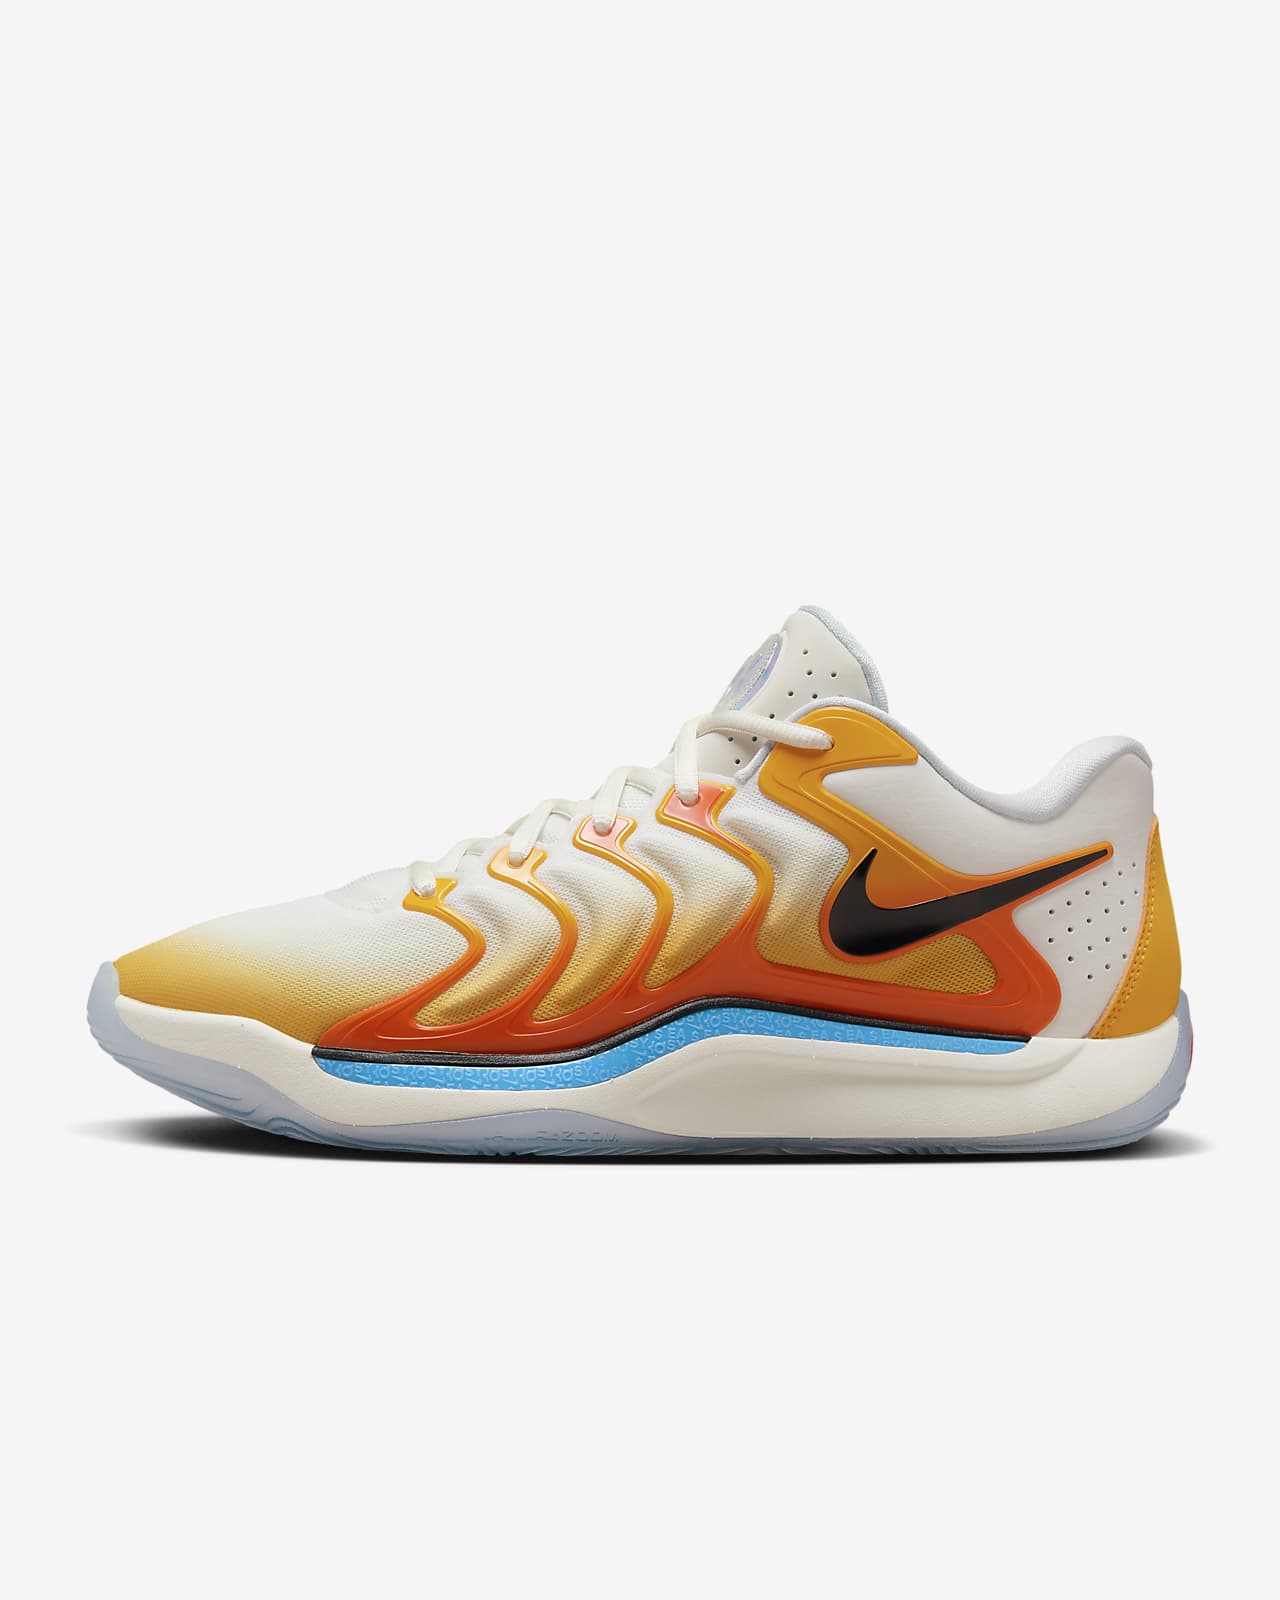 KD17 'Sunrise' Basketball Shoes